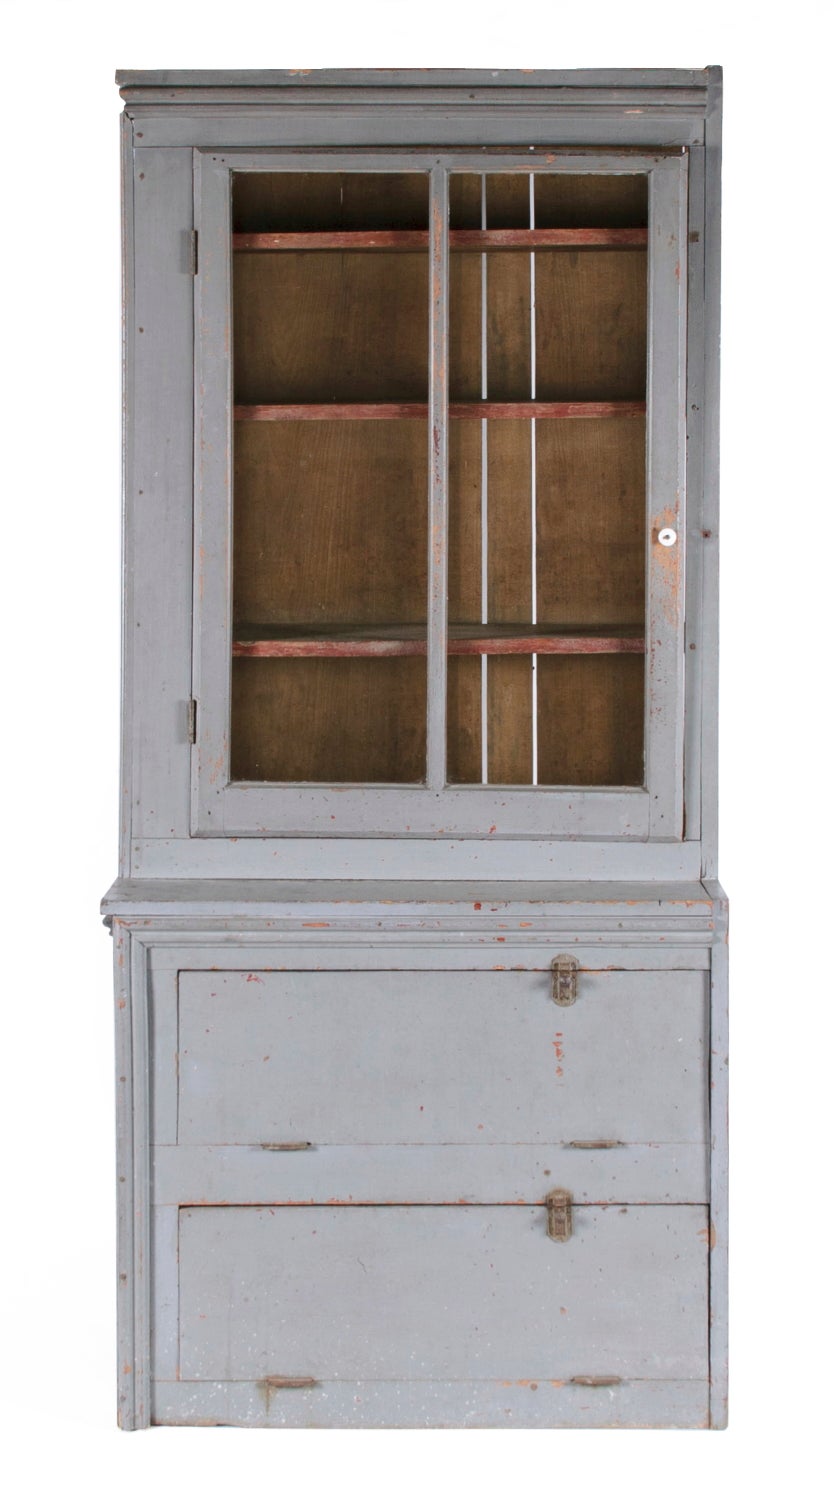 Narrow Make-Do Pennsylvania Cupboard in Grey Paint, Late 19th Century